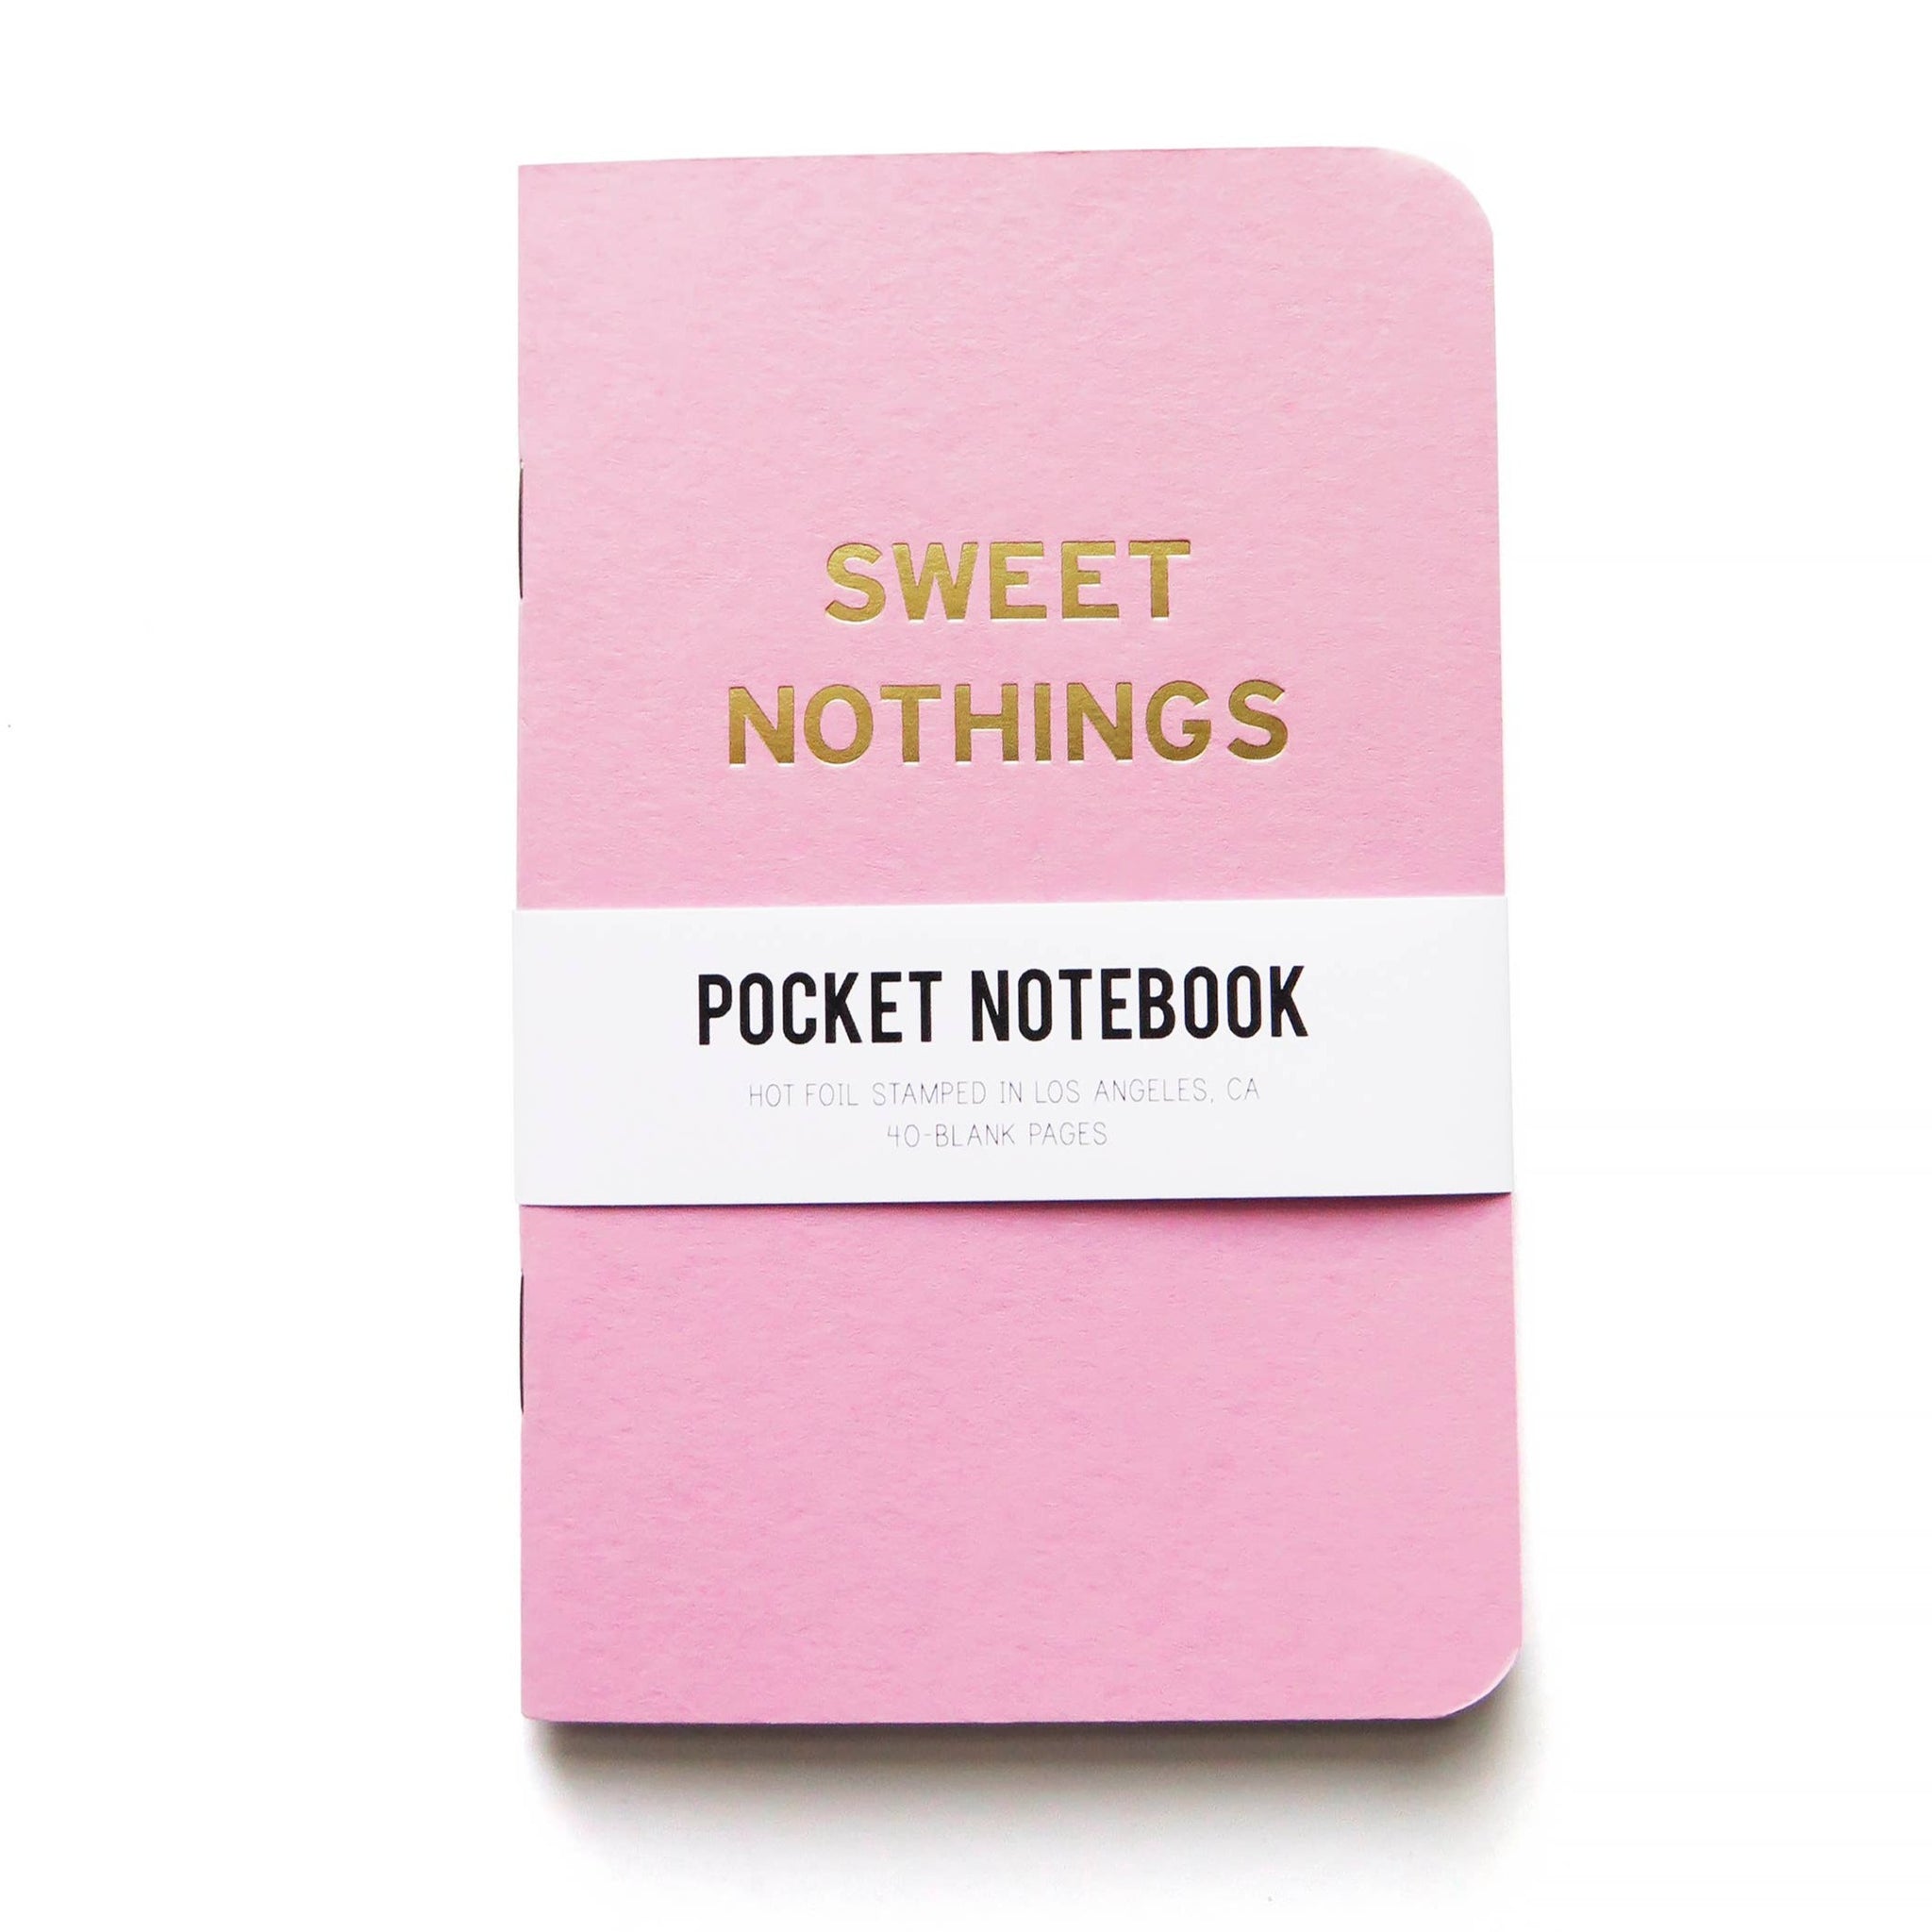 SWEET NOTHINGS Hot Foil Stamped Pocket Notebook